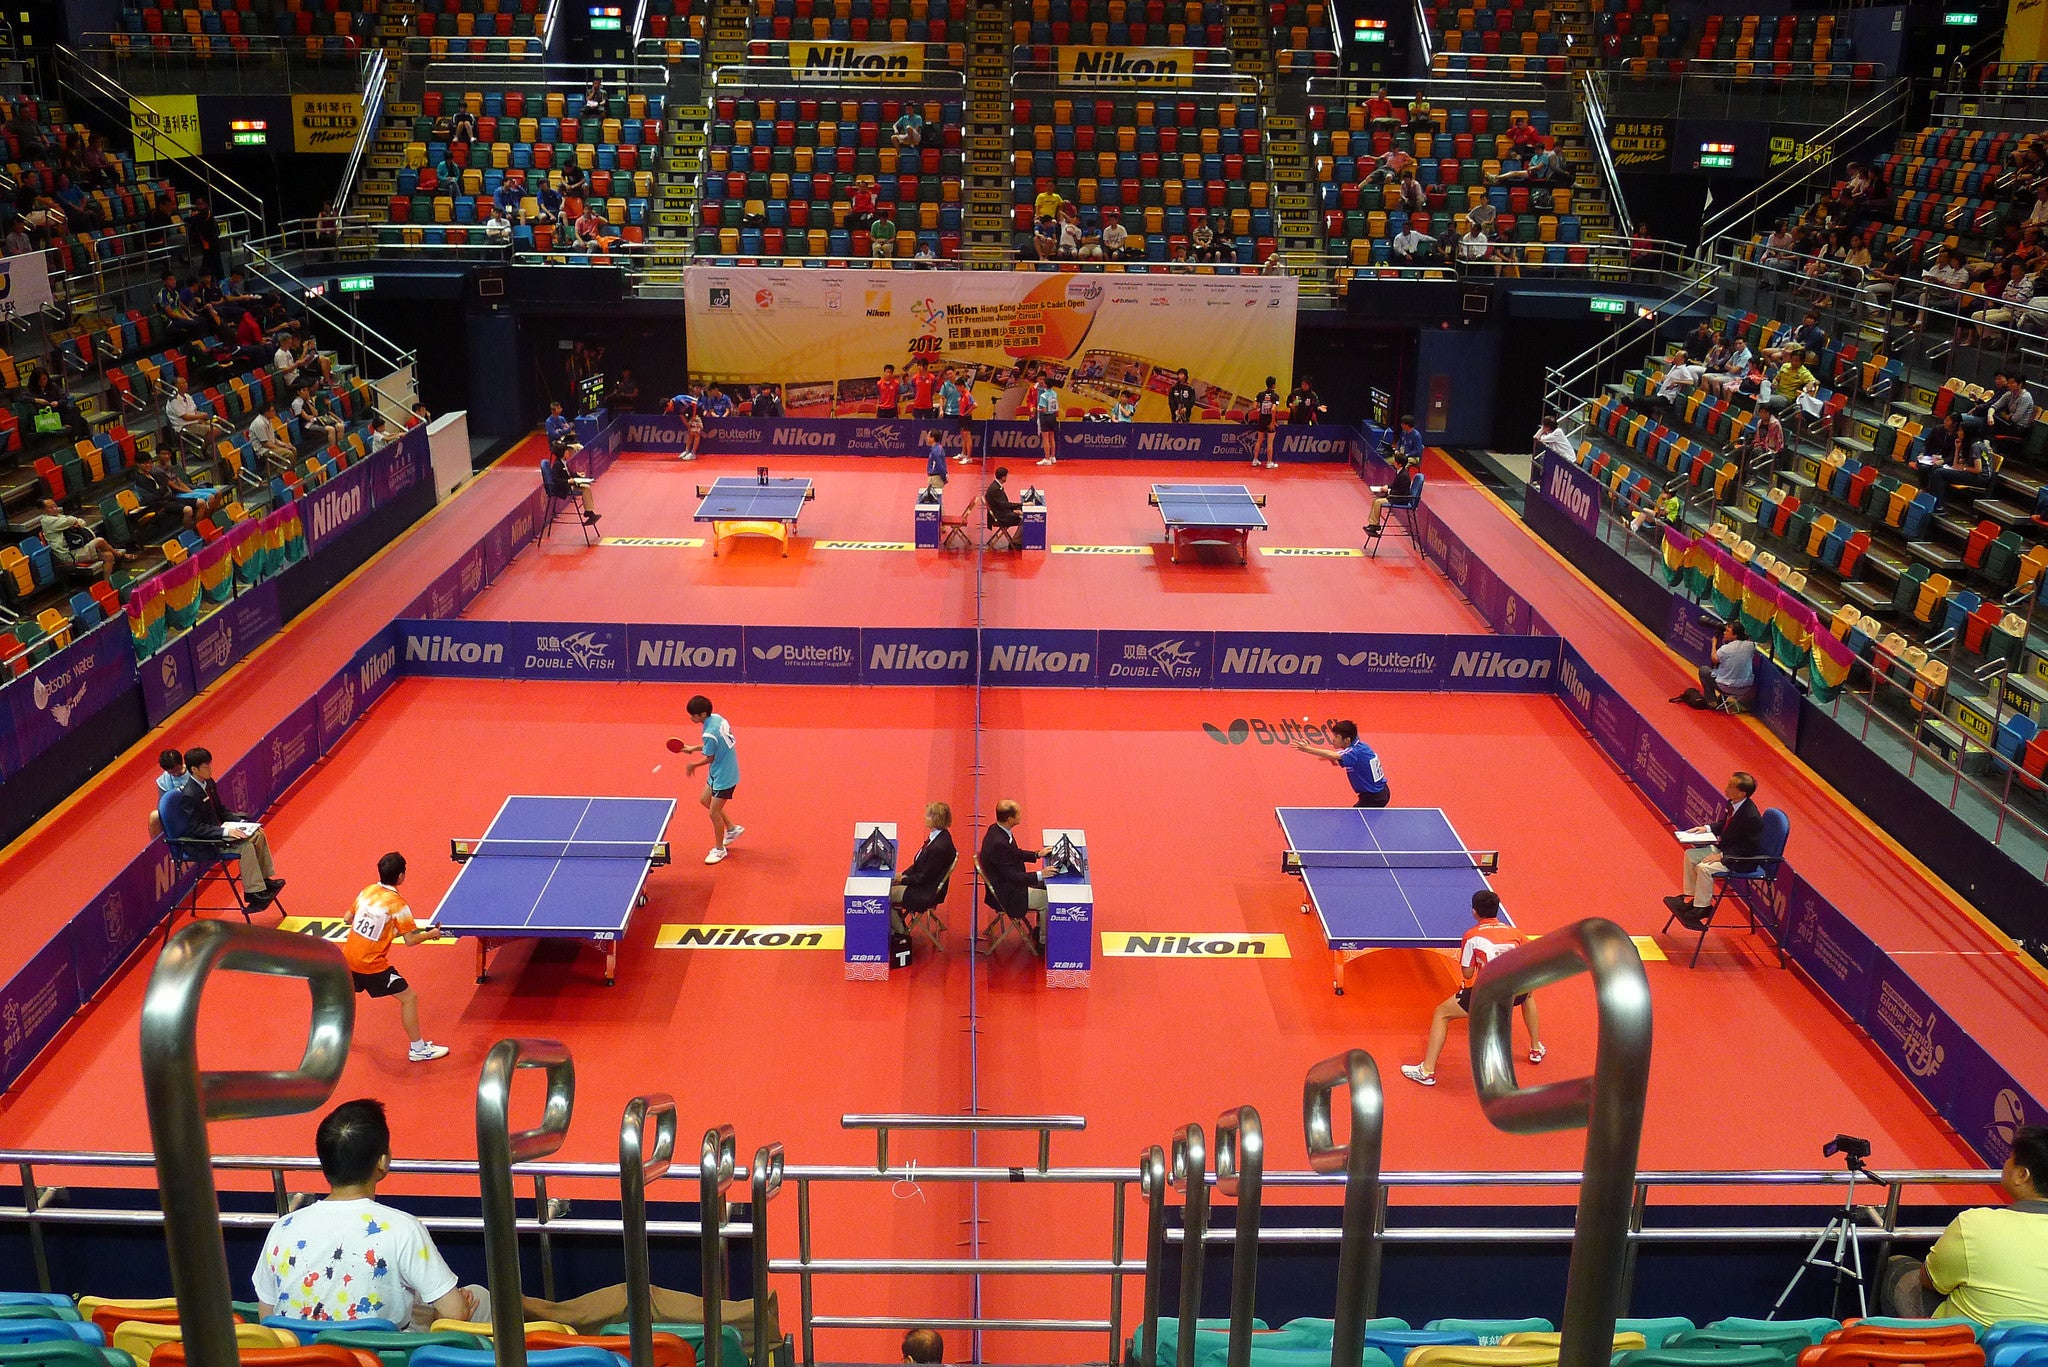 ITTF (International Table Tennis Federation)